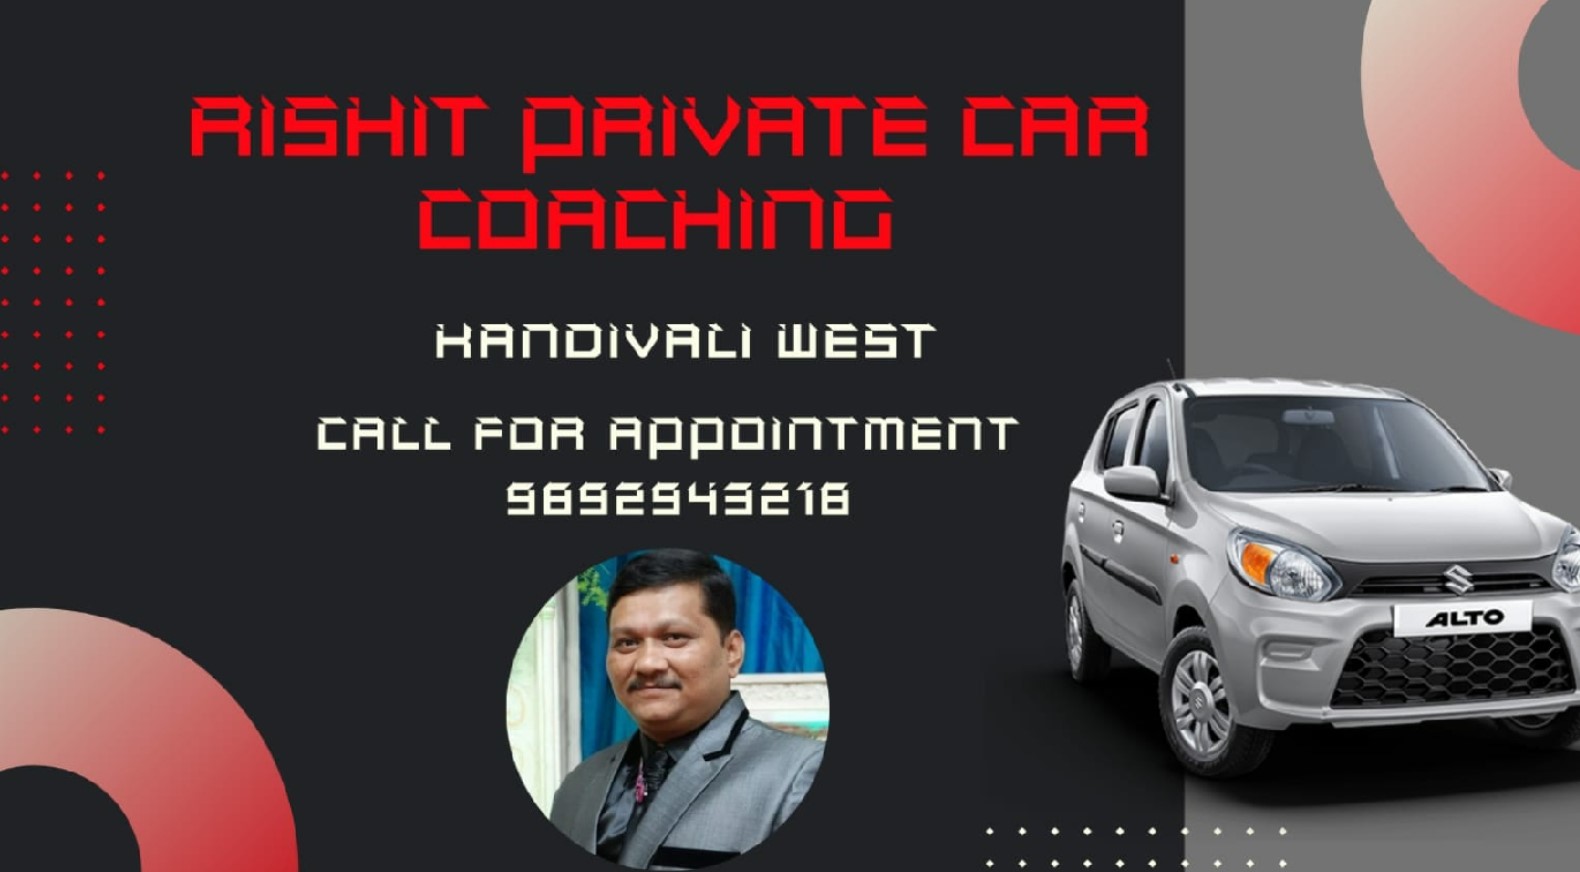 Rishit Private Car Training in Kandivali West